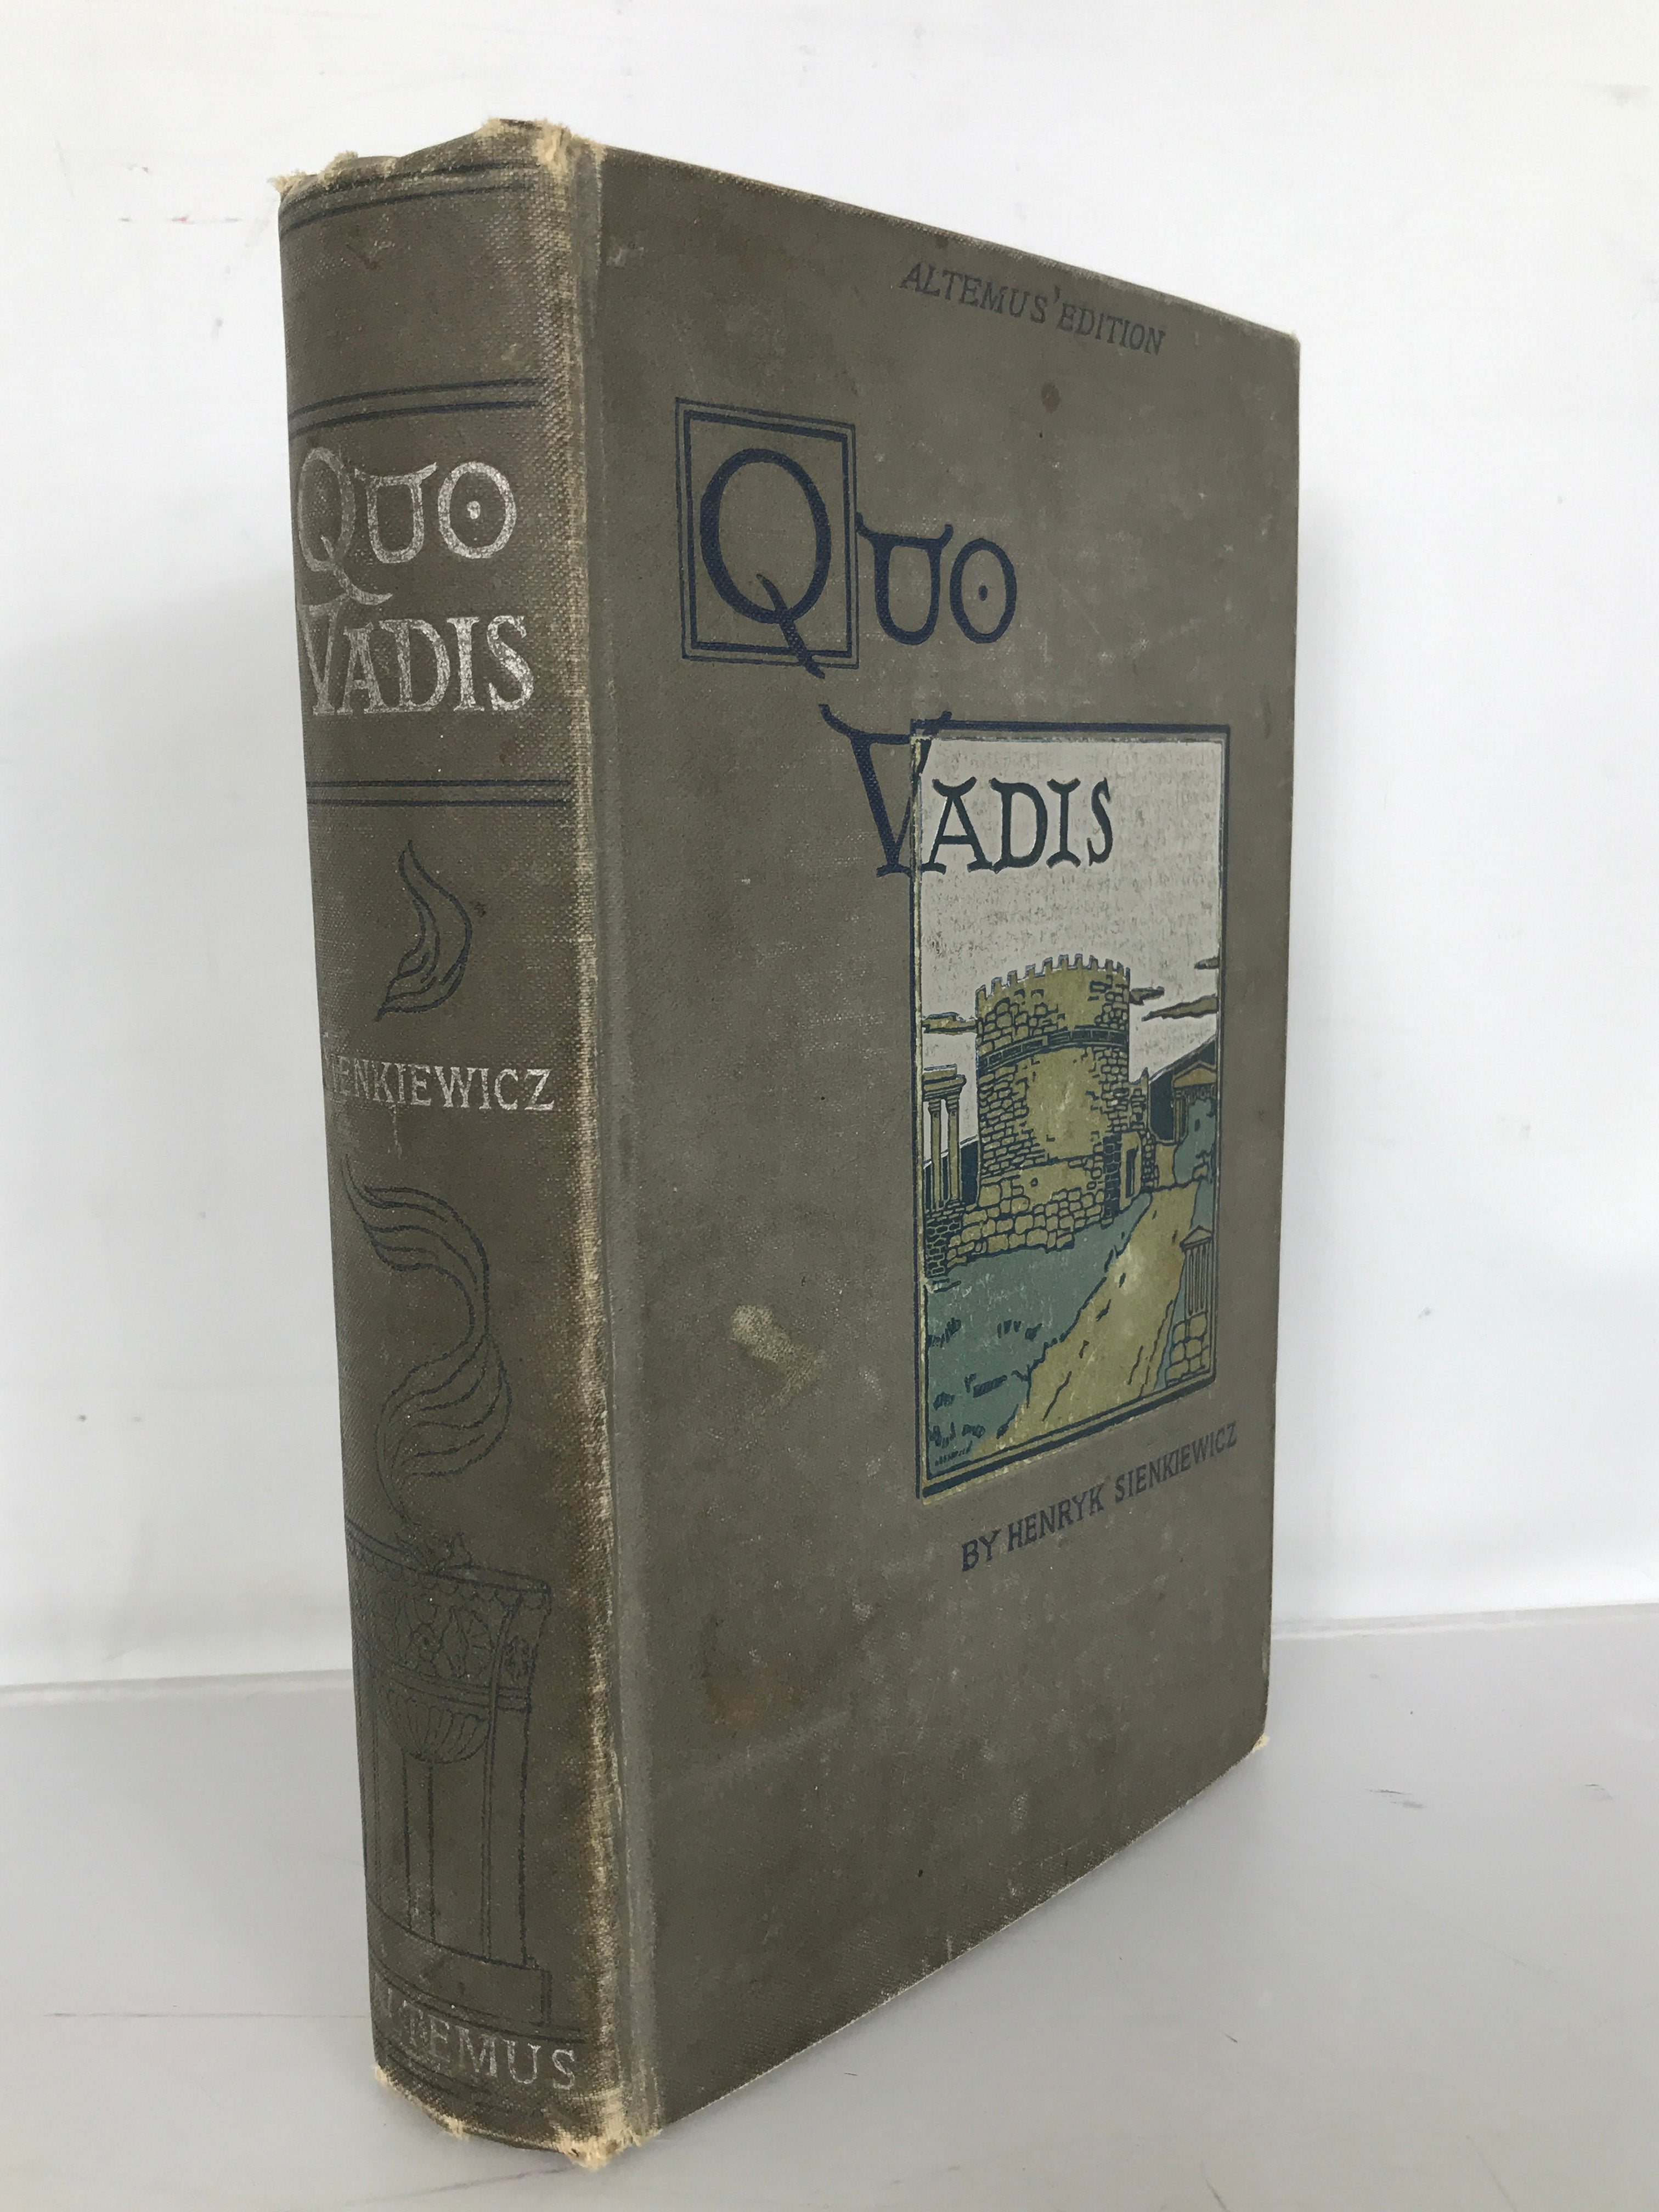 Quo Vadis by Henryk Sienkiewicz copyright 1925 